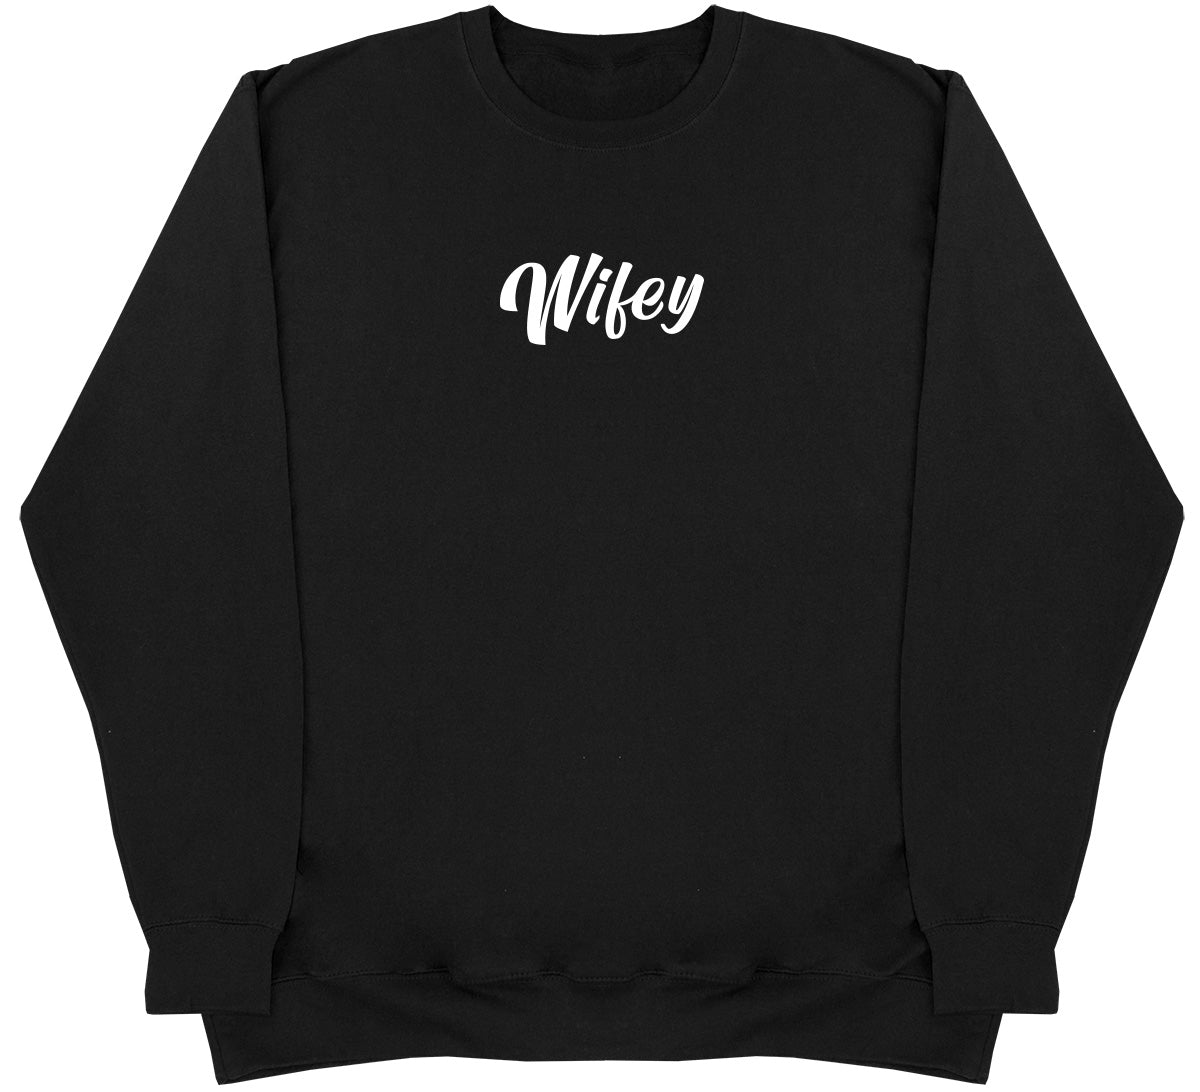 Wifey - Huge Oversized Comfy Original Sweater